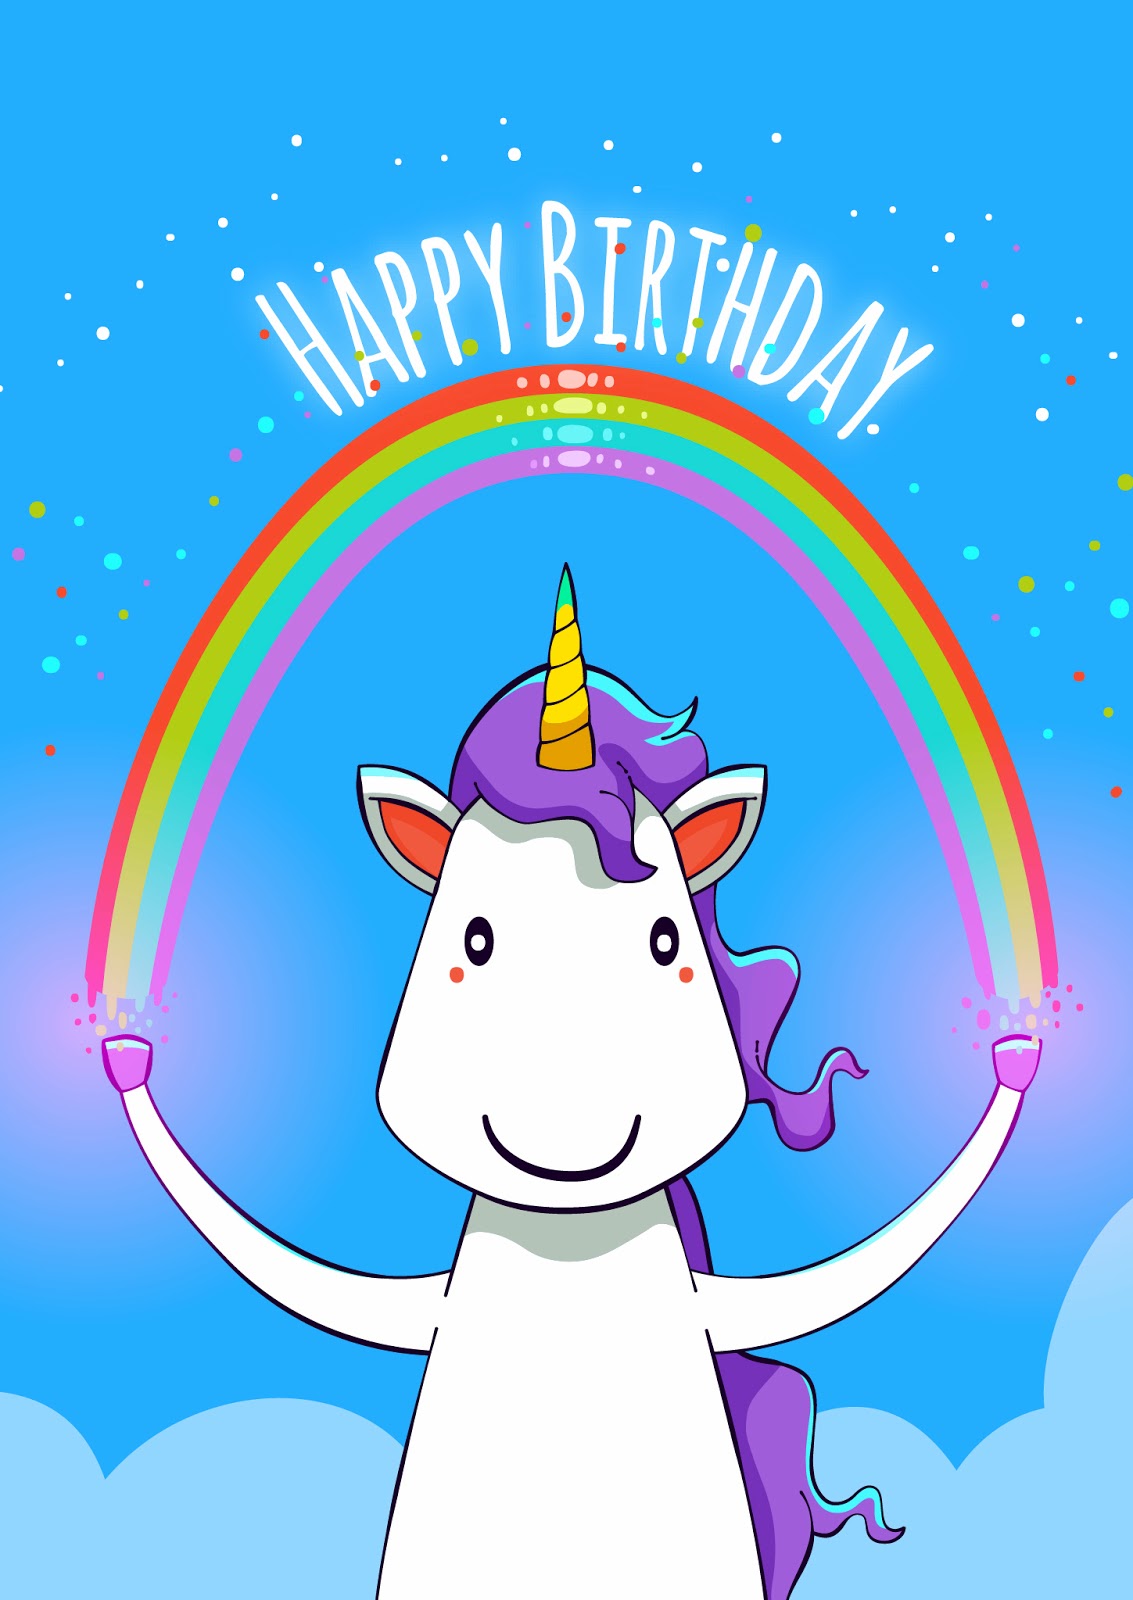 Unicorn birthday cards.